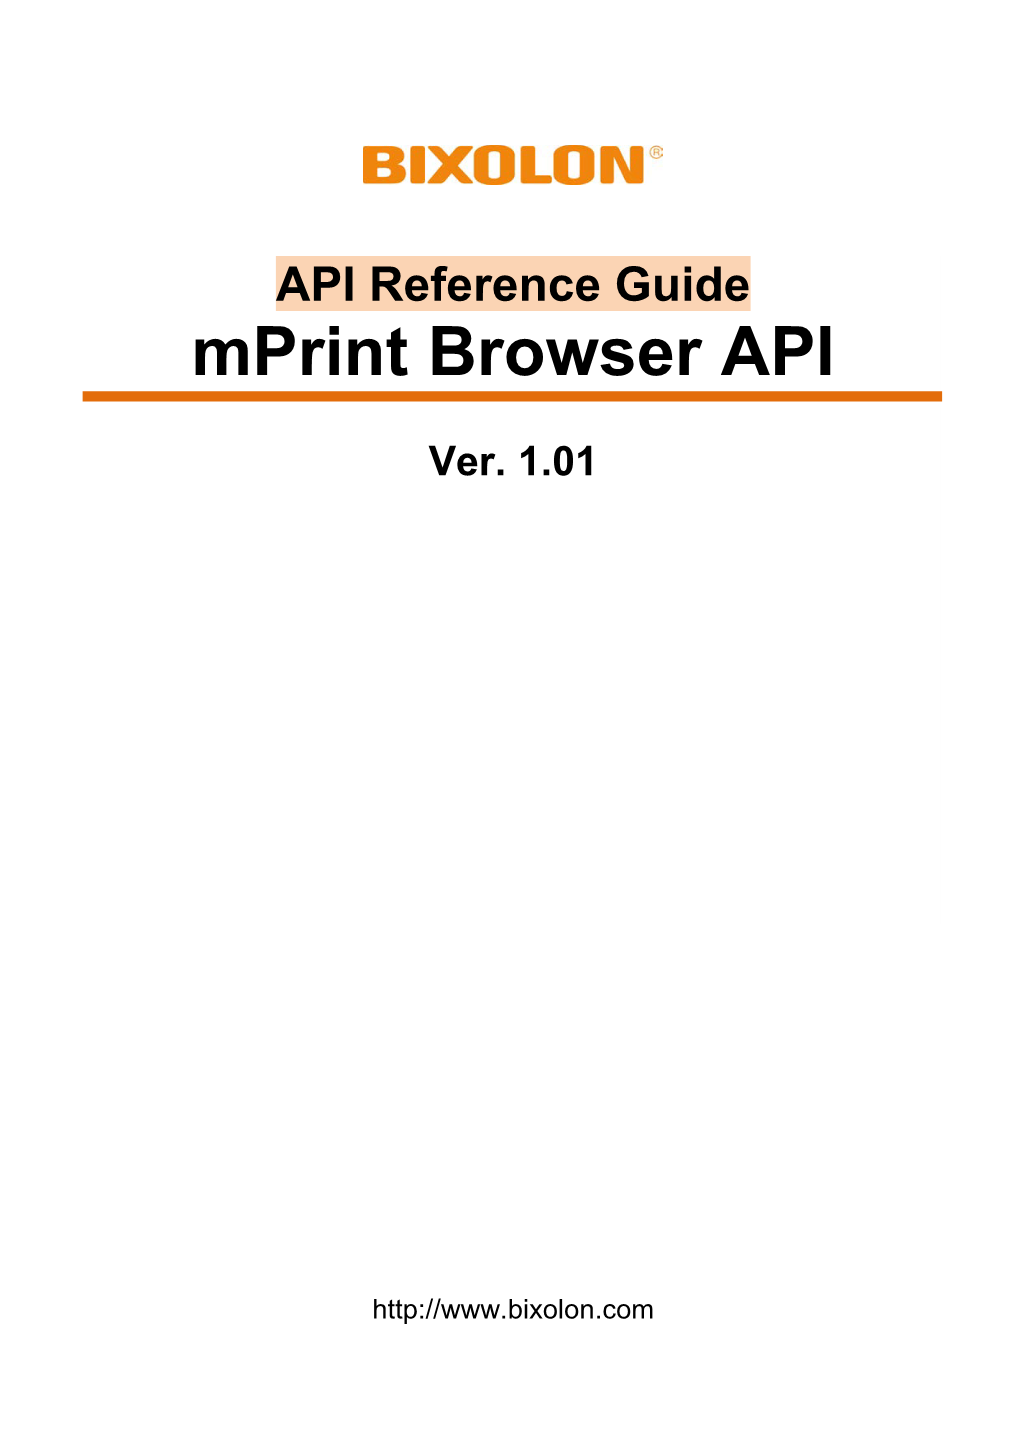 Mprint Browser API